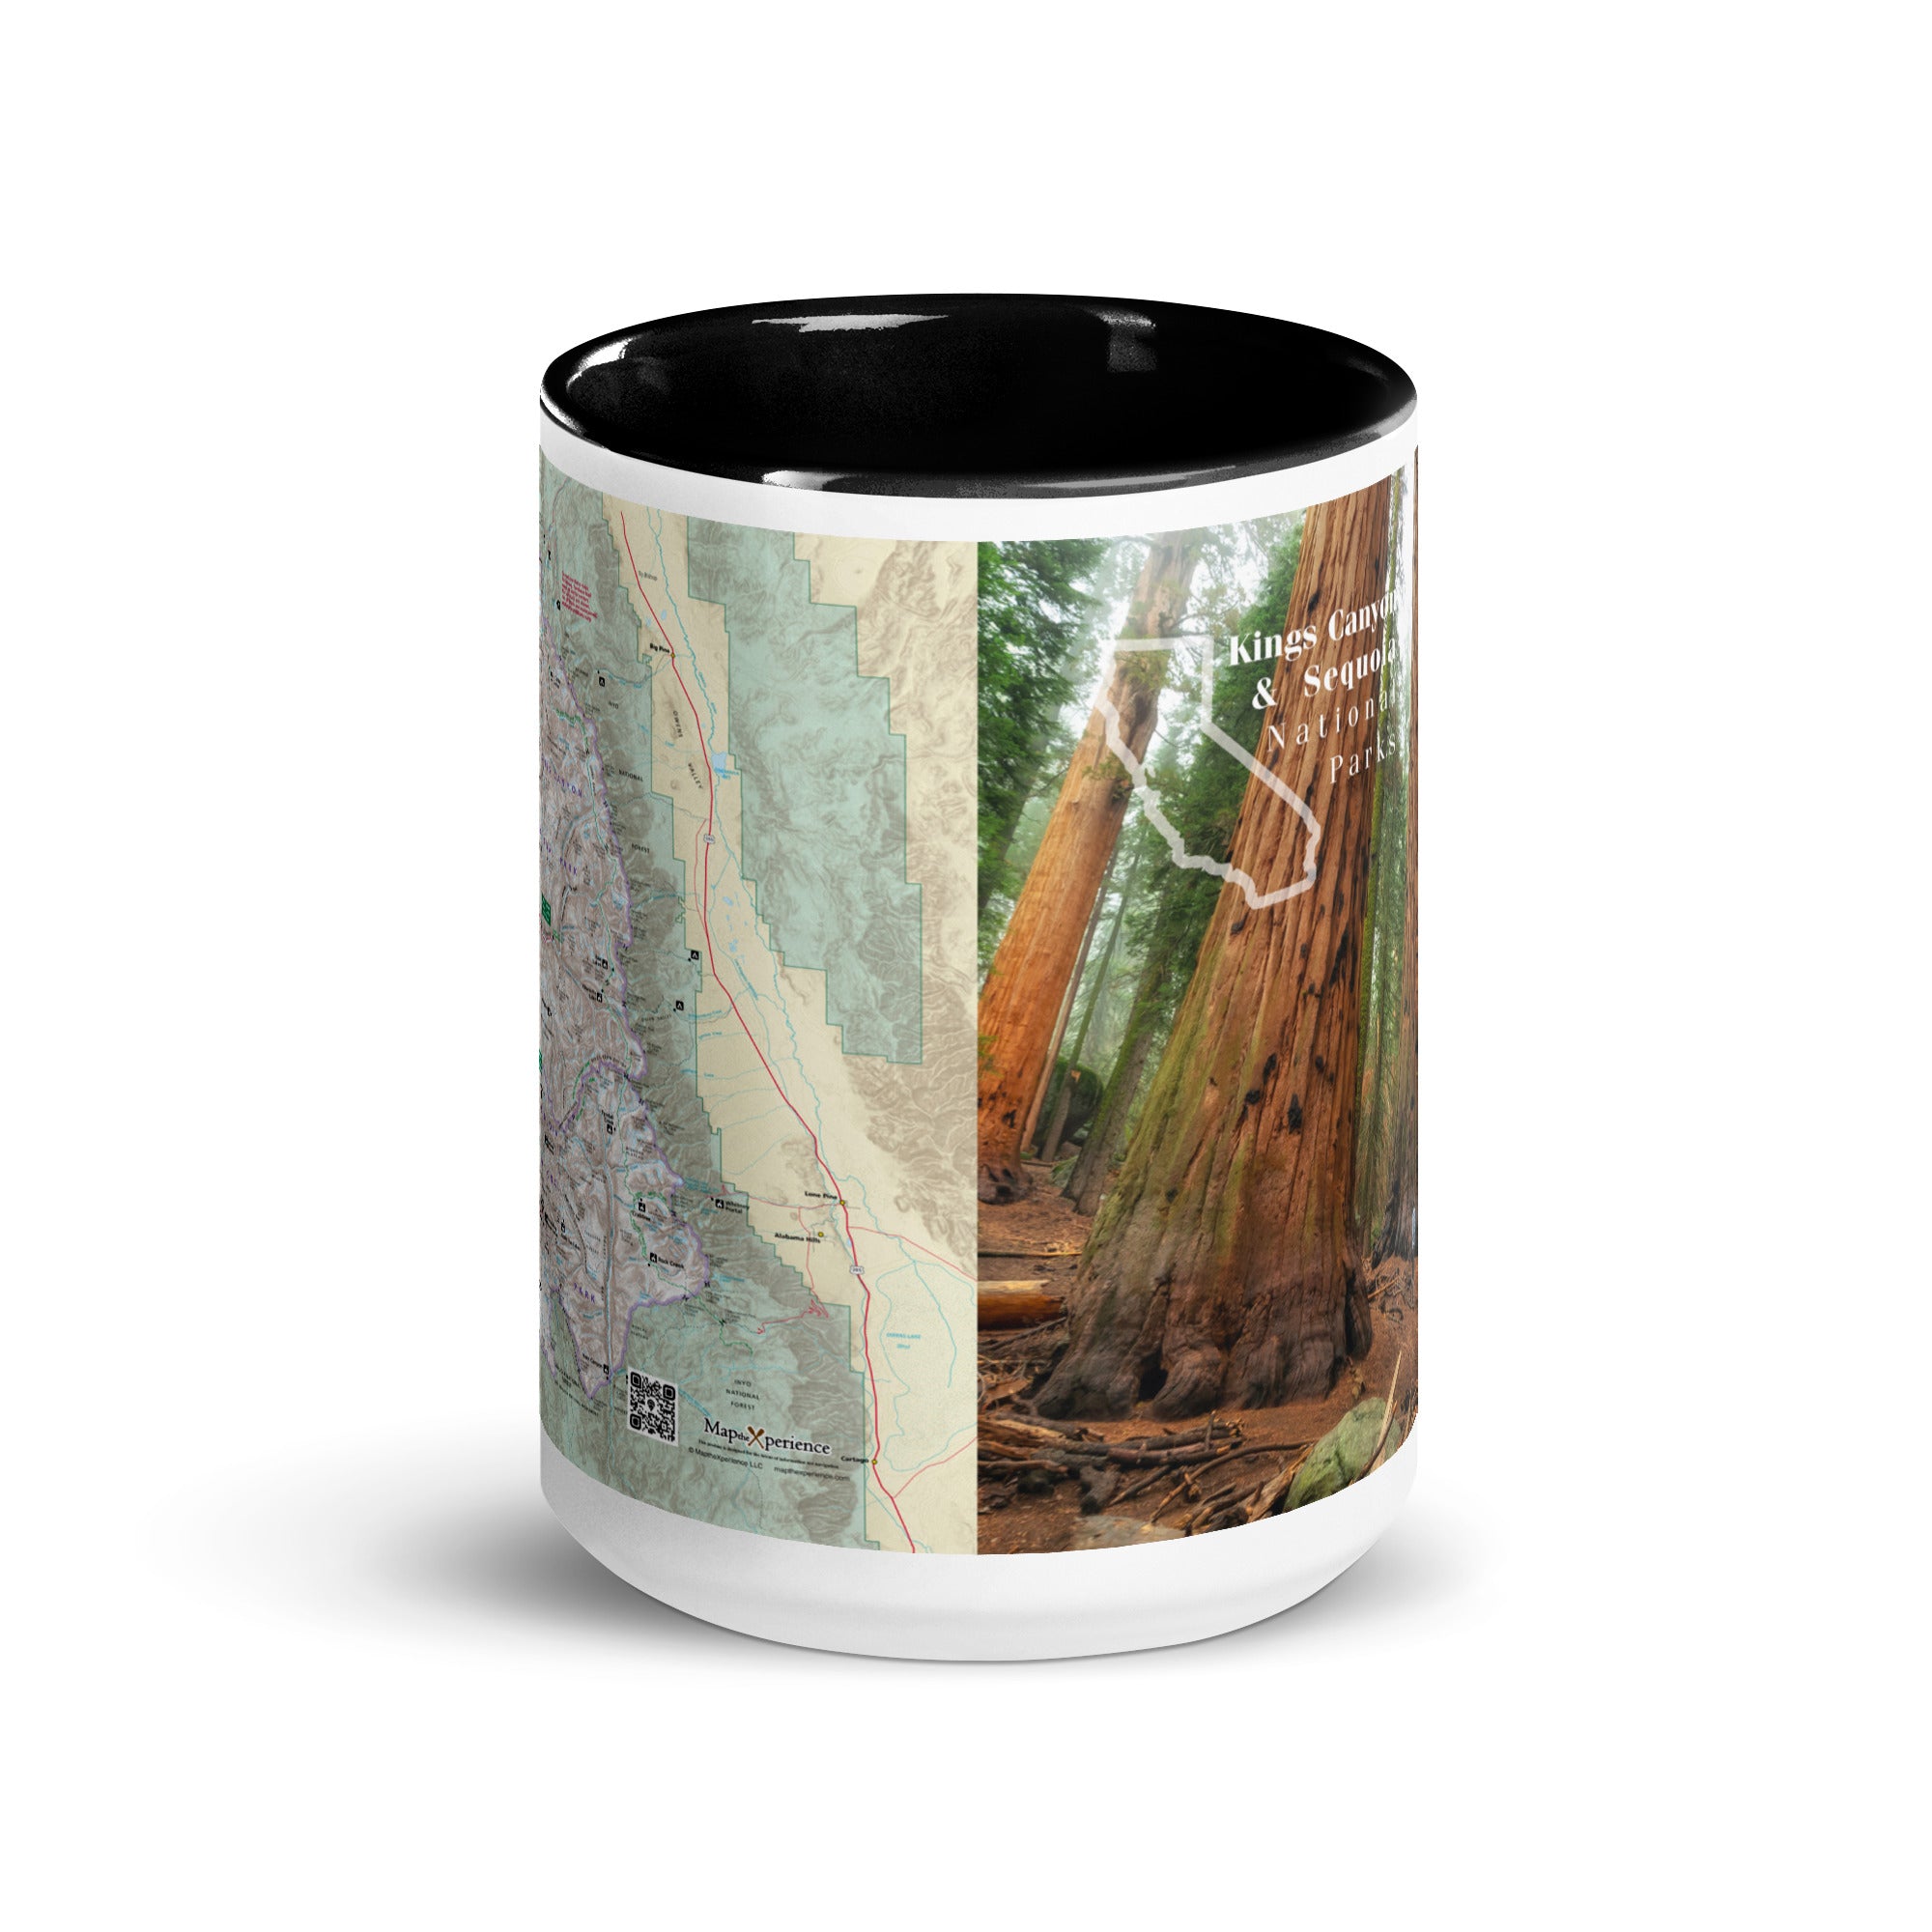 Sequoia National Park Mug with Black Inside